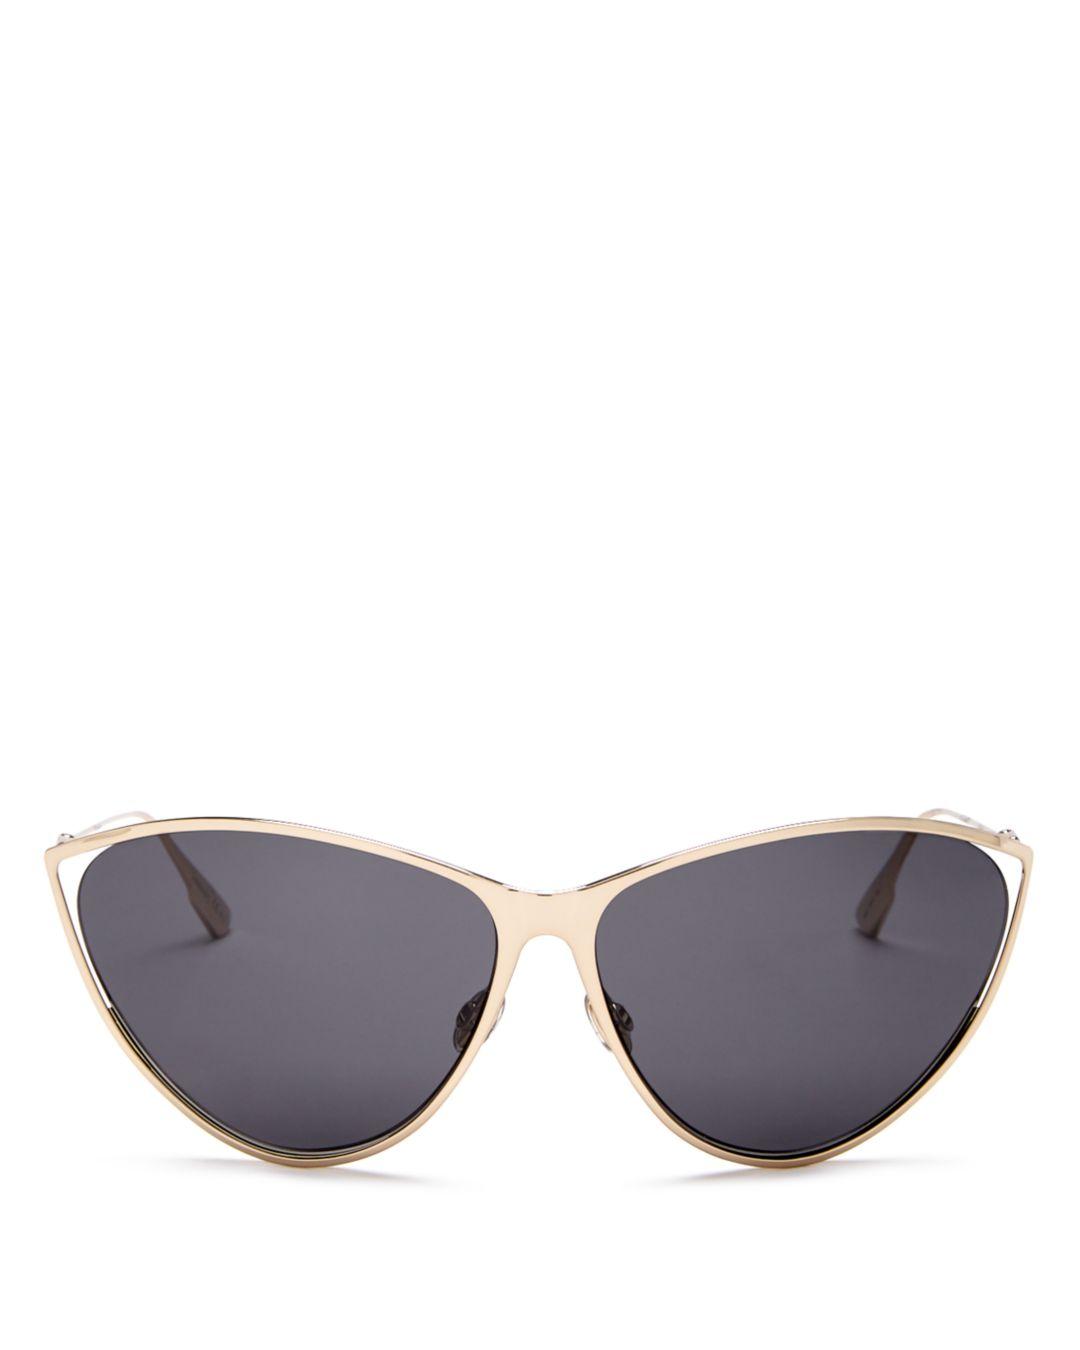 Dior Women's New Motard Cat Eye Sunglasses | Lyst